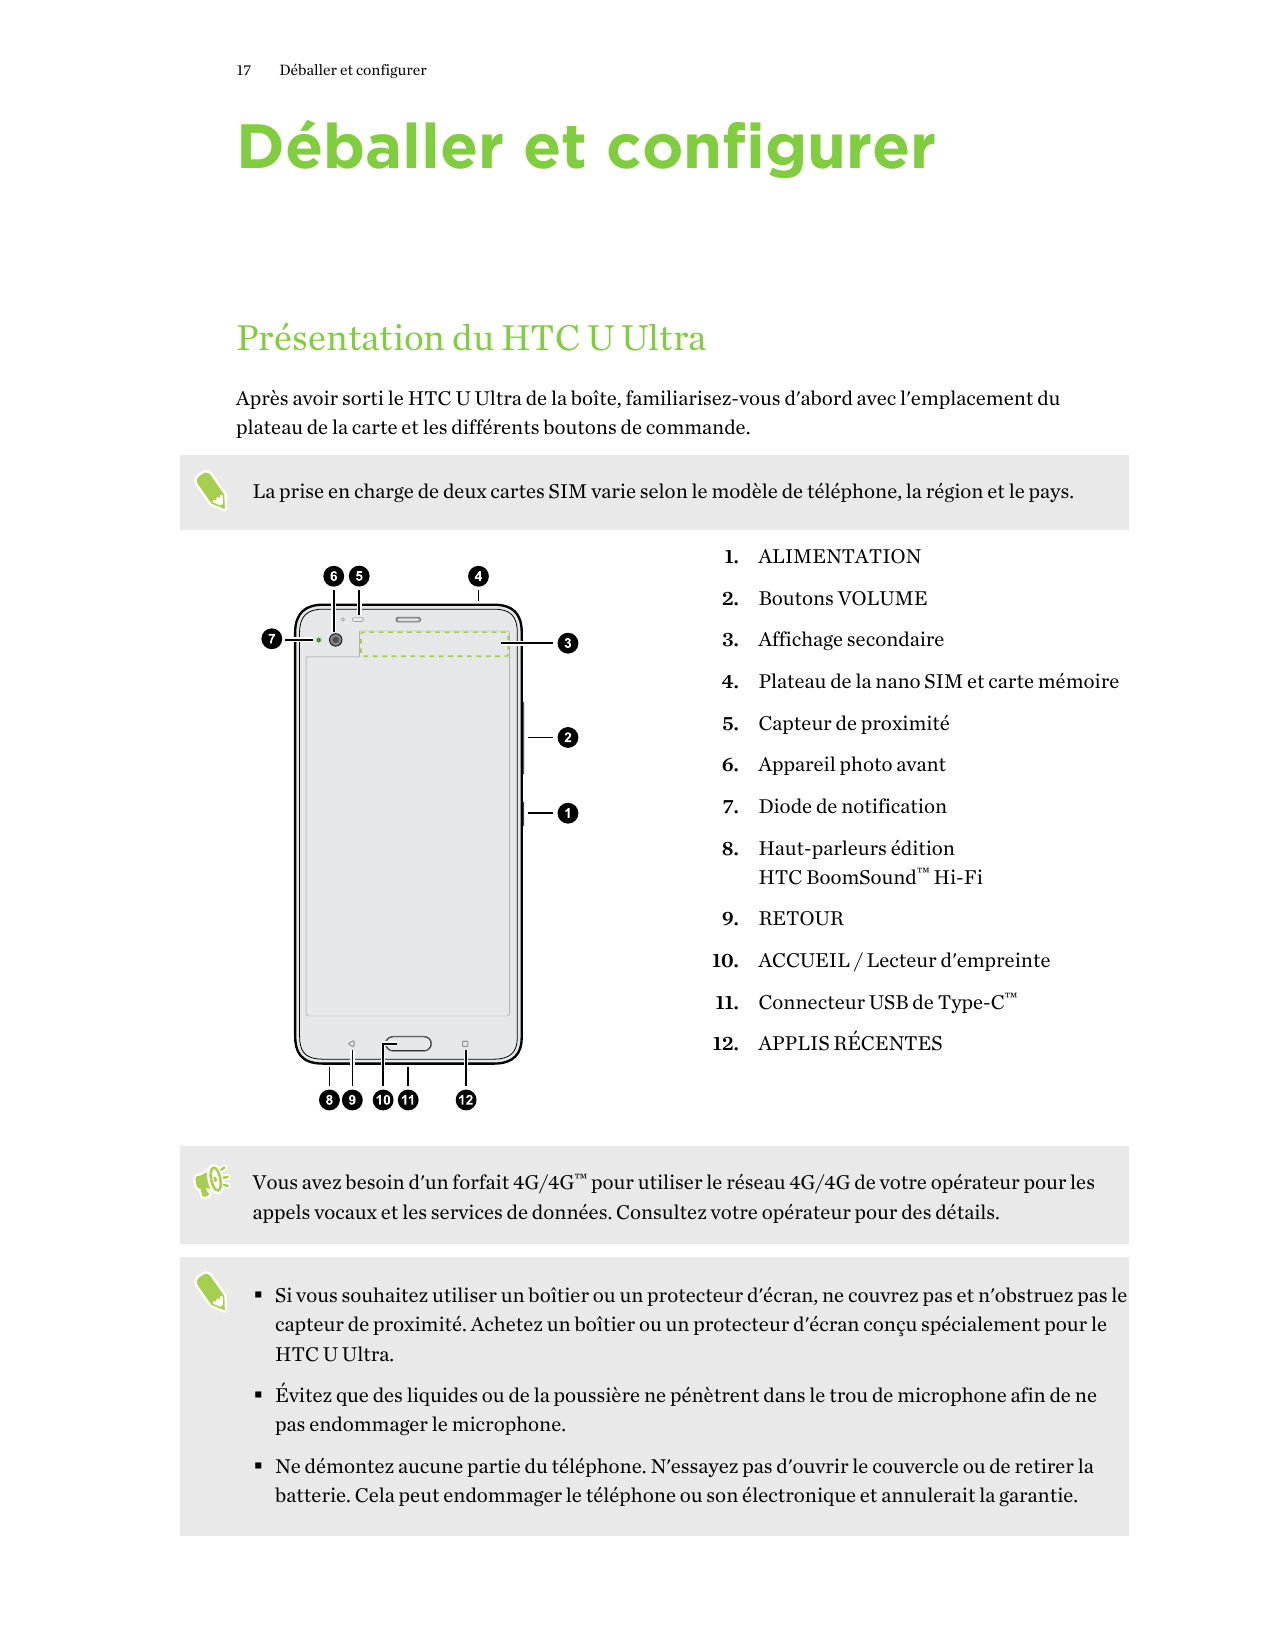 17Déballer et configurerDéballer et configurerPrésentation du HTC U UltraAprès avoir sorti le HTC U Ultra de la boîte, familiari